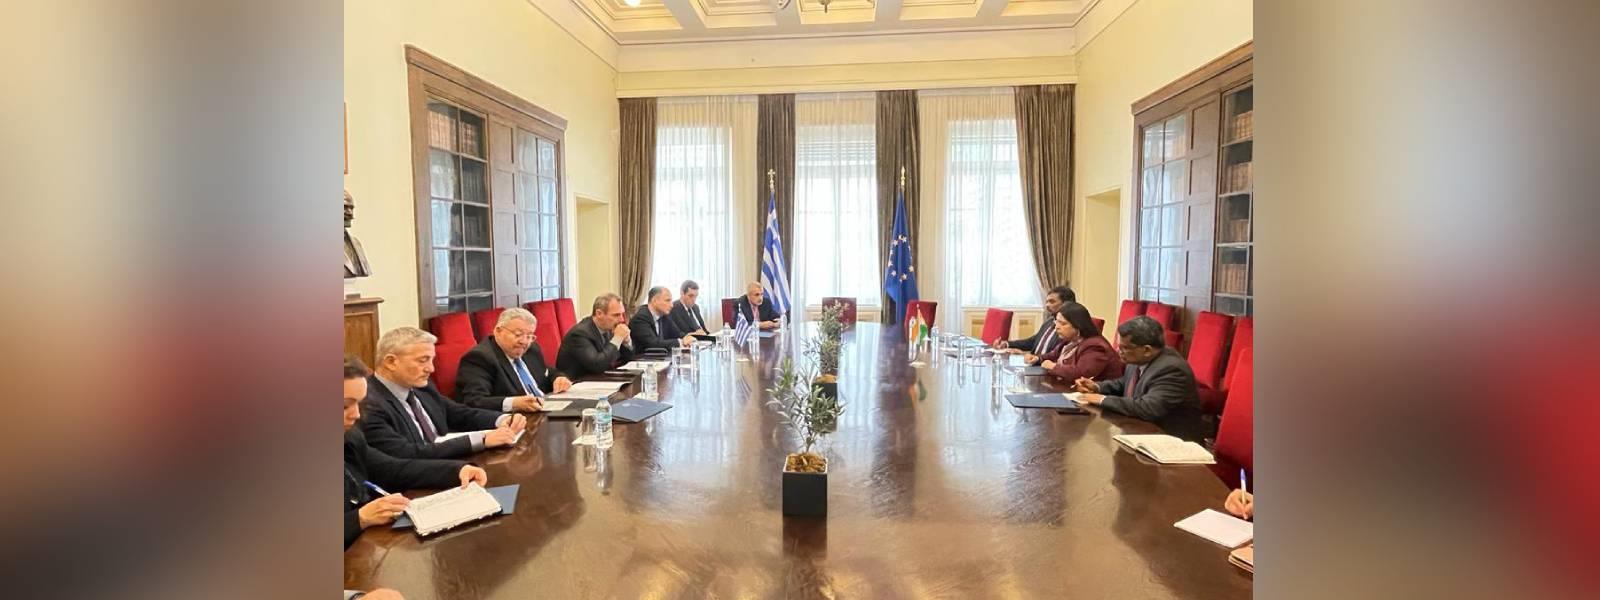 Minister of State for External Affairs, Smt. Meenakashi Lekhi met H. E. Mr. Andreas Katsaniotis, Deputy Foreign Minister of Greece in Athens